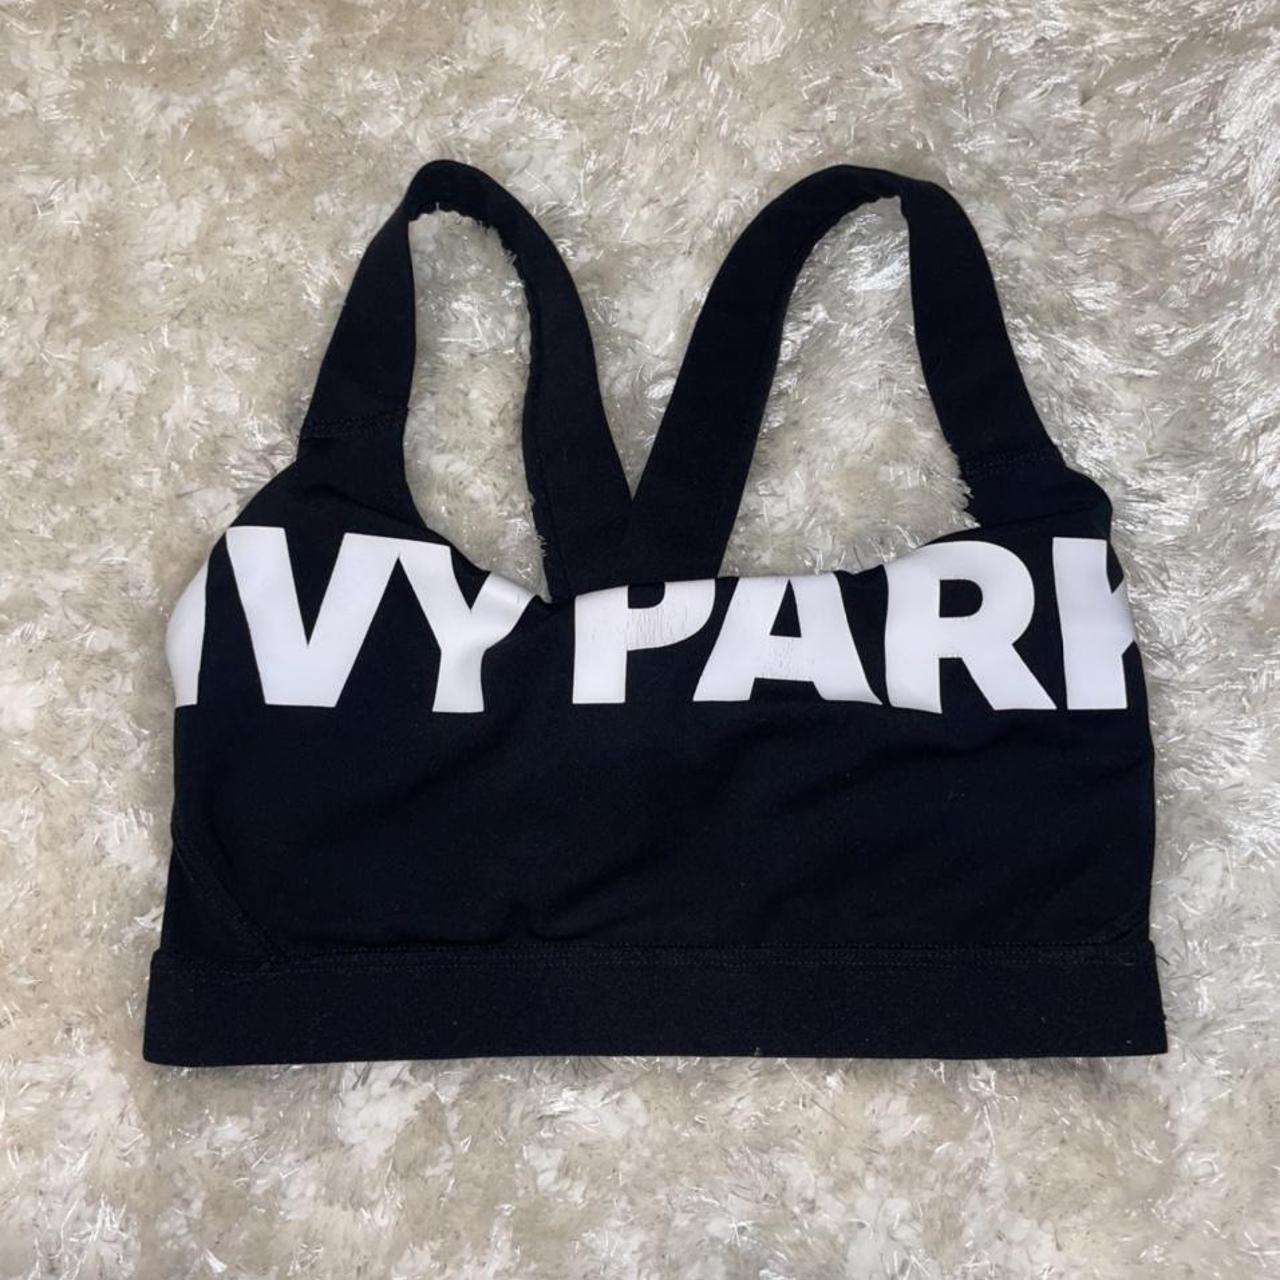 Black and white Ivy Park sports bra! Super trendy